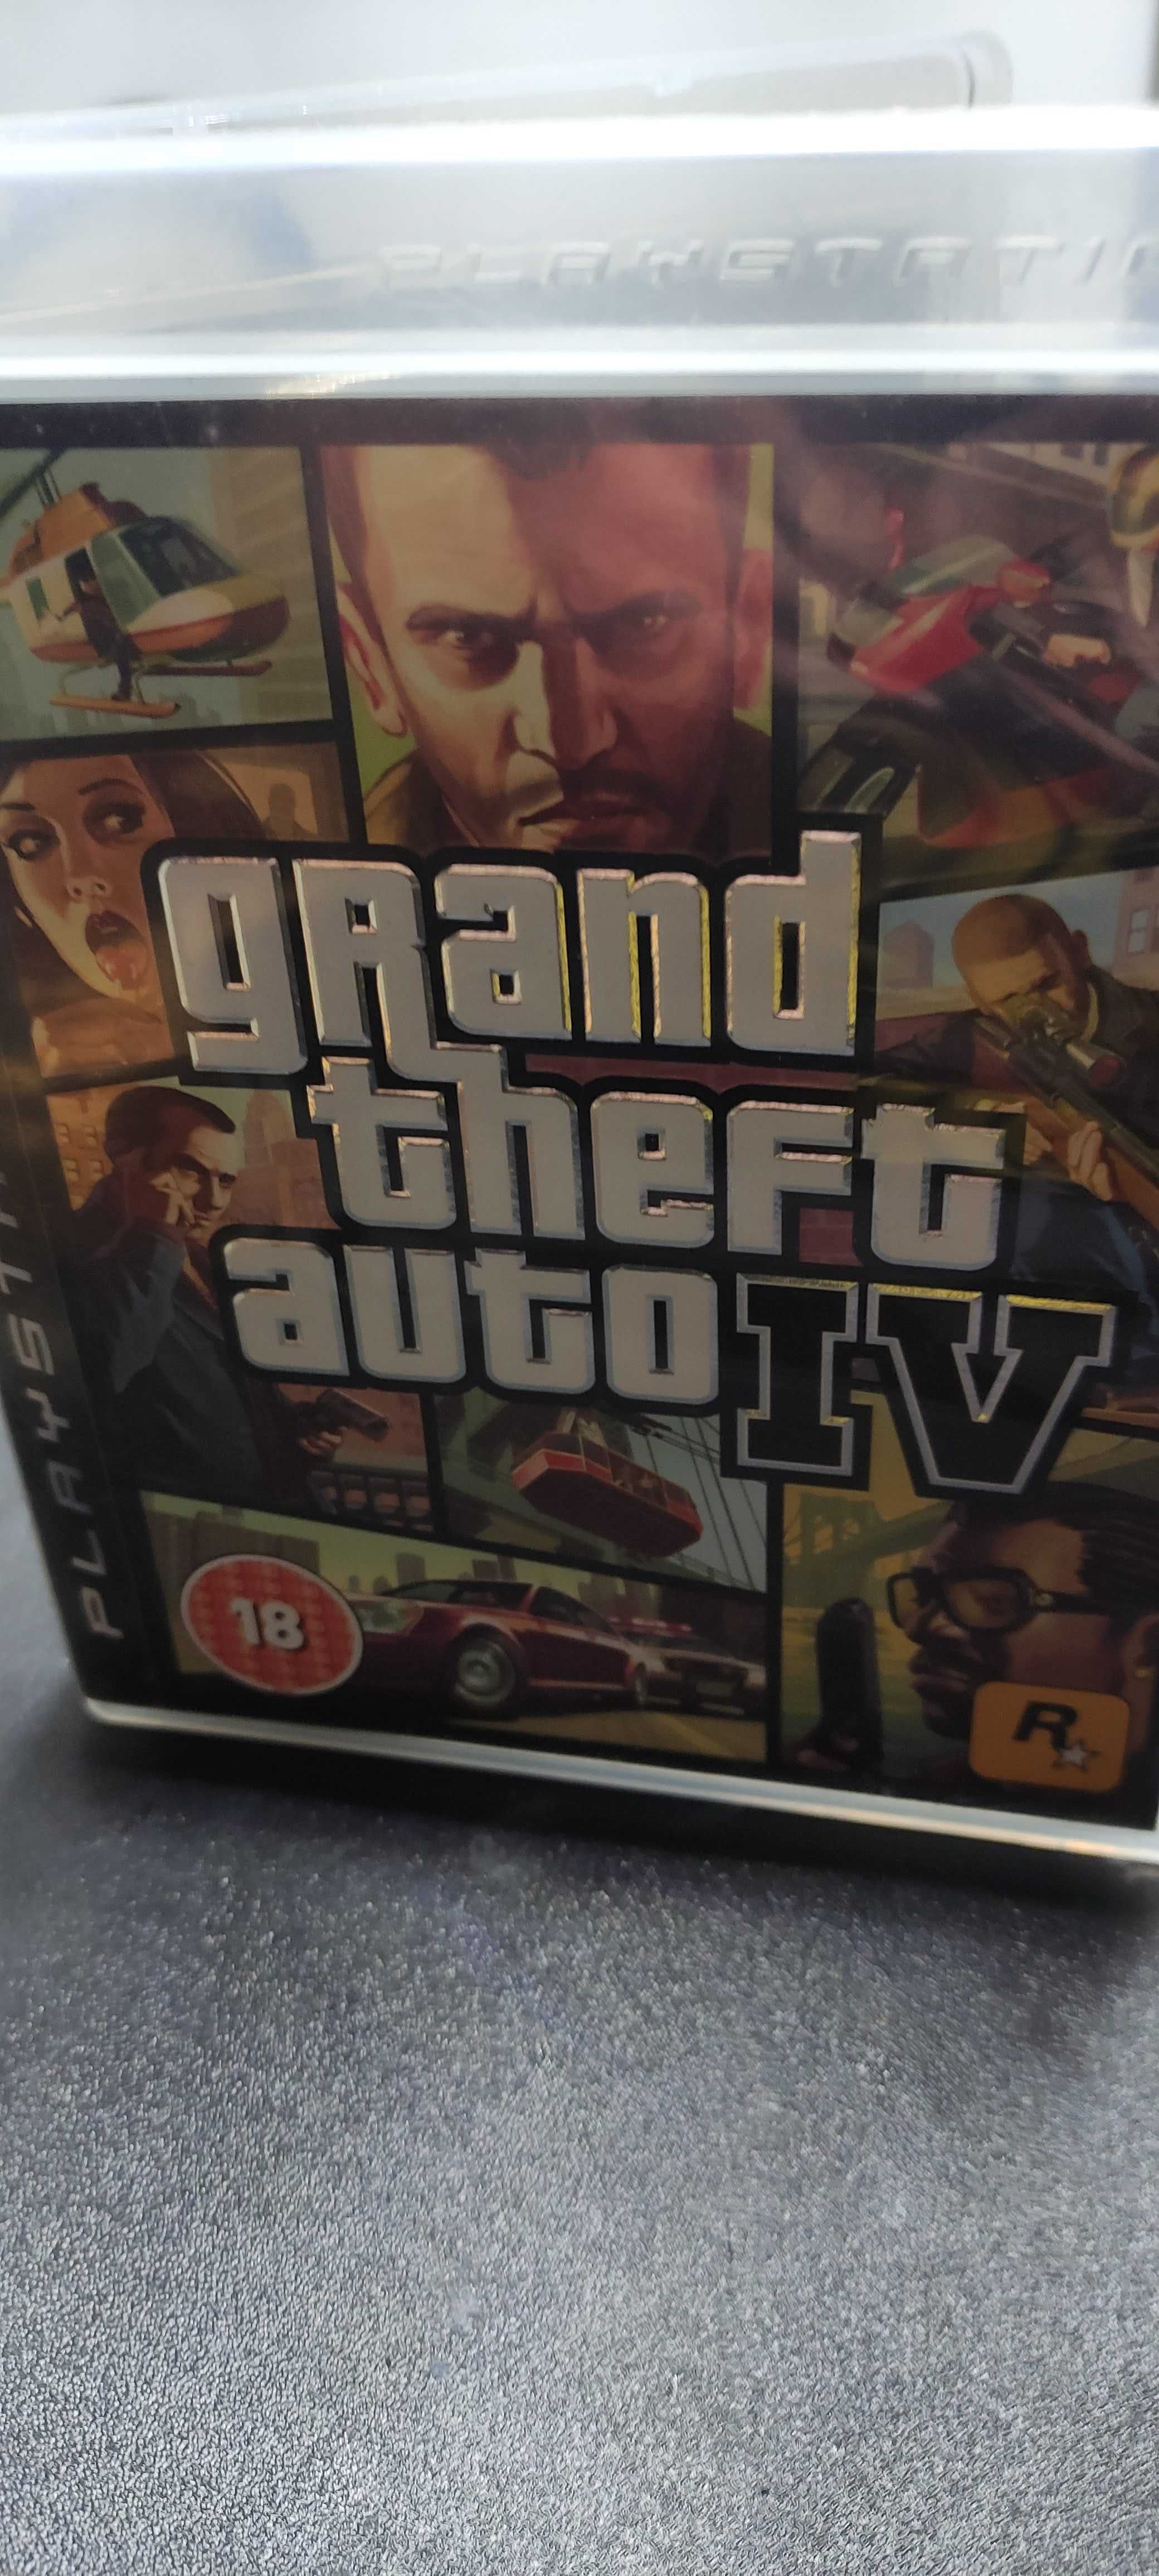 Grand Theft Auto IV - PS3